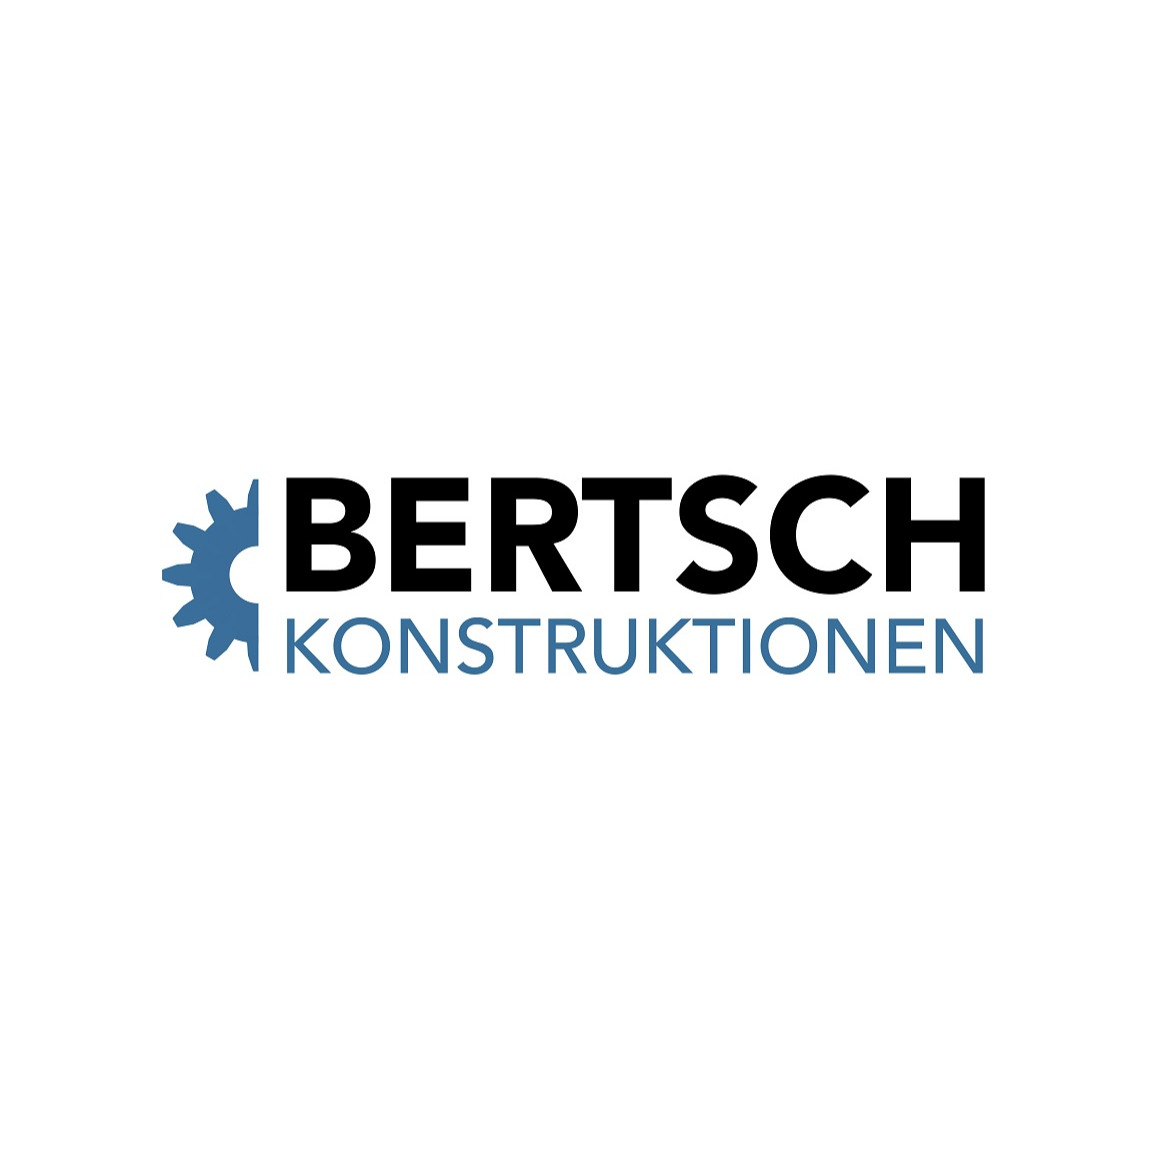 Bertsch Konstruktionen - Ing. Roland Bertsch 6921 Kennelbach